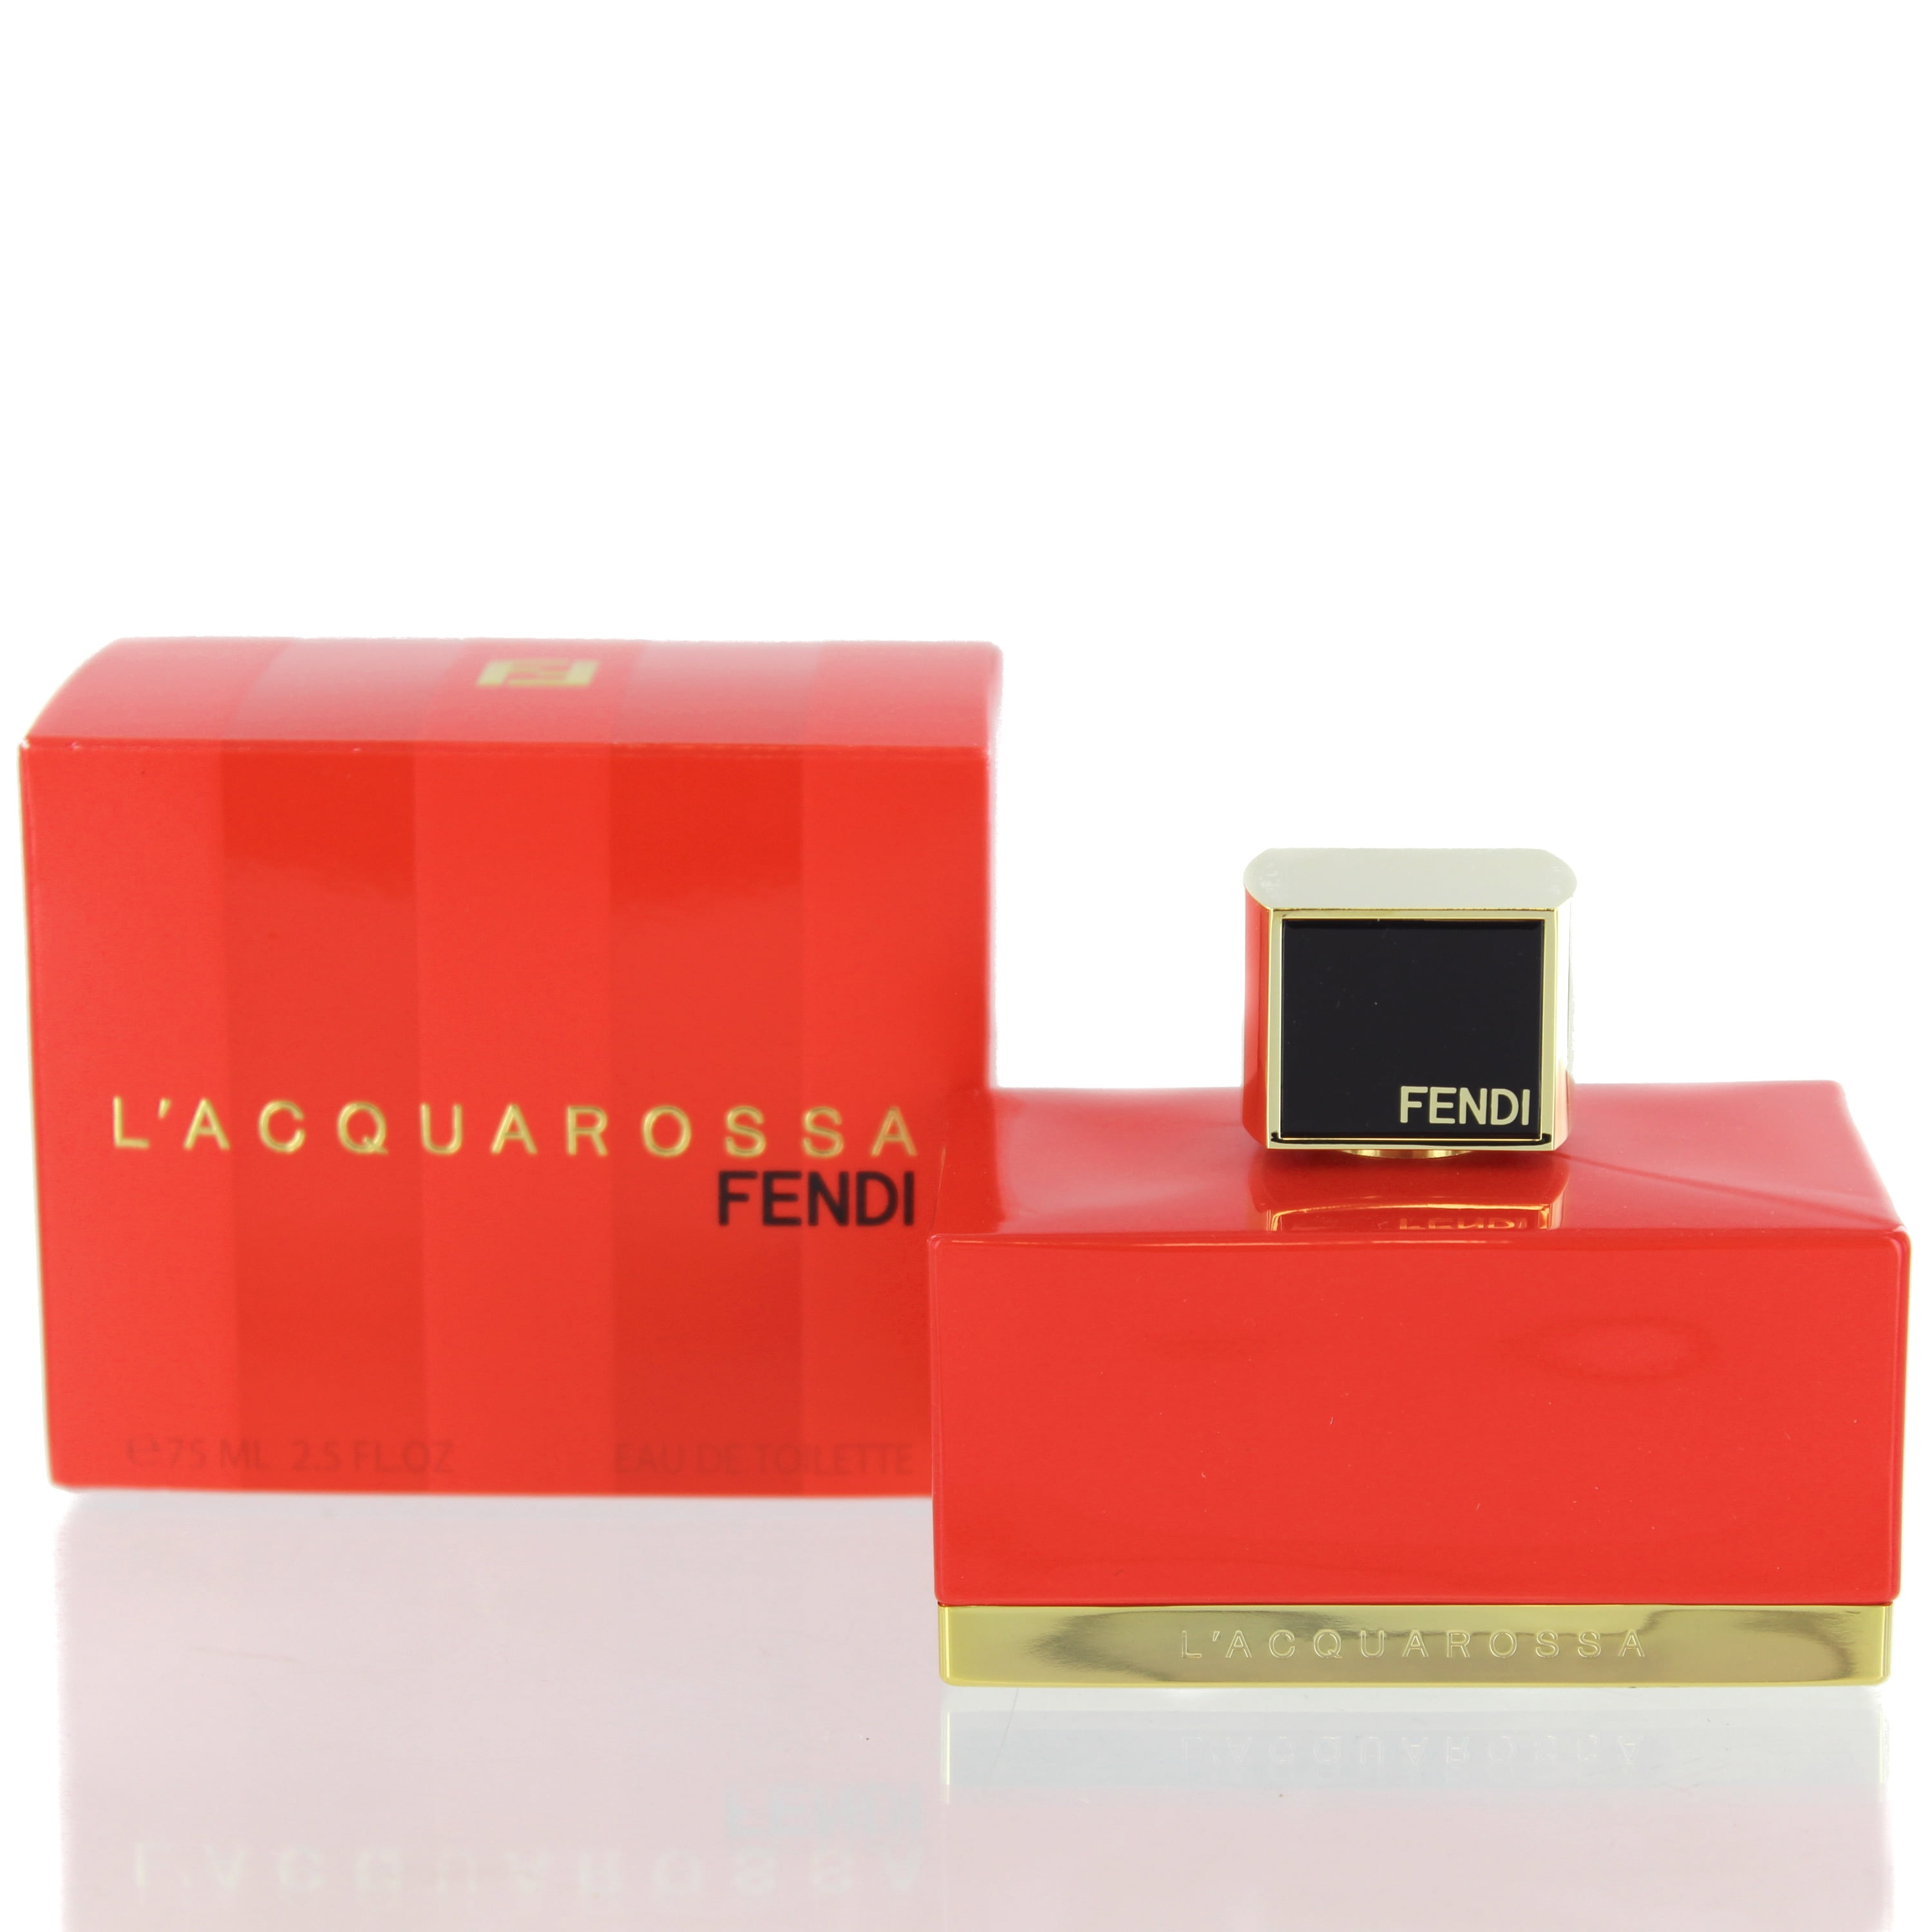 Fendi L'Acquarossa Eau de Toilette, Perfume for 2.5 Oz - Walmart.com